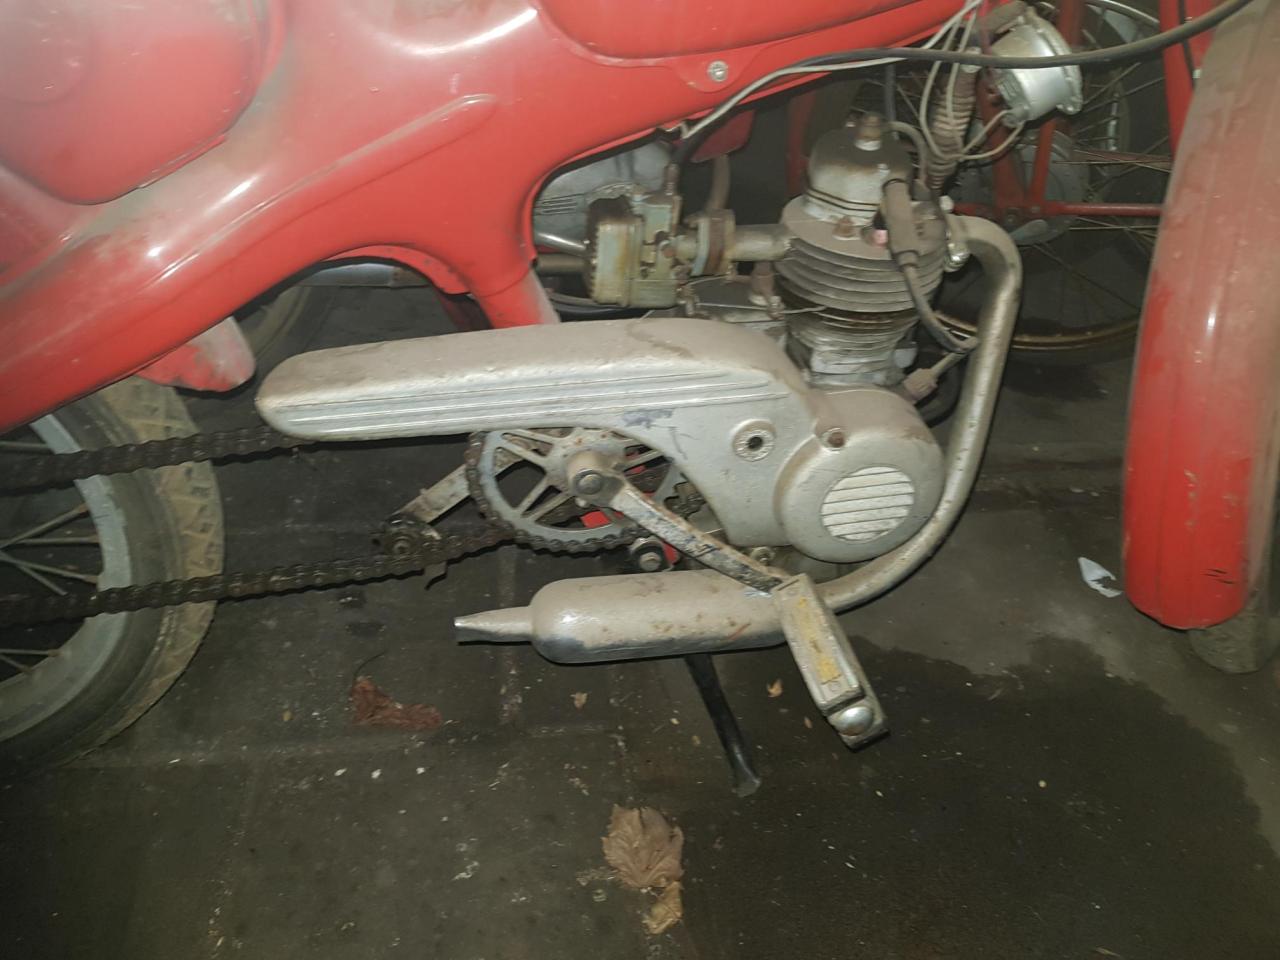 1960 Motom to restore